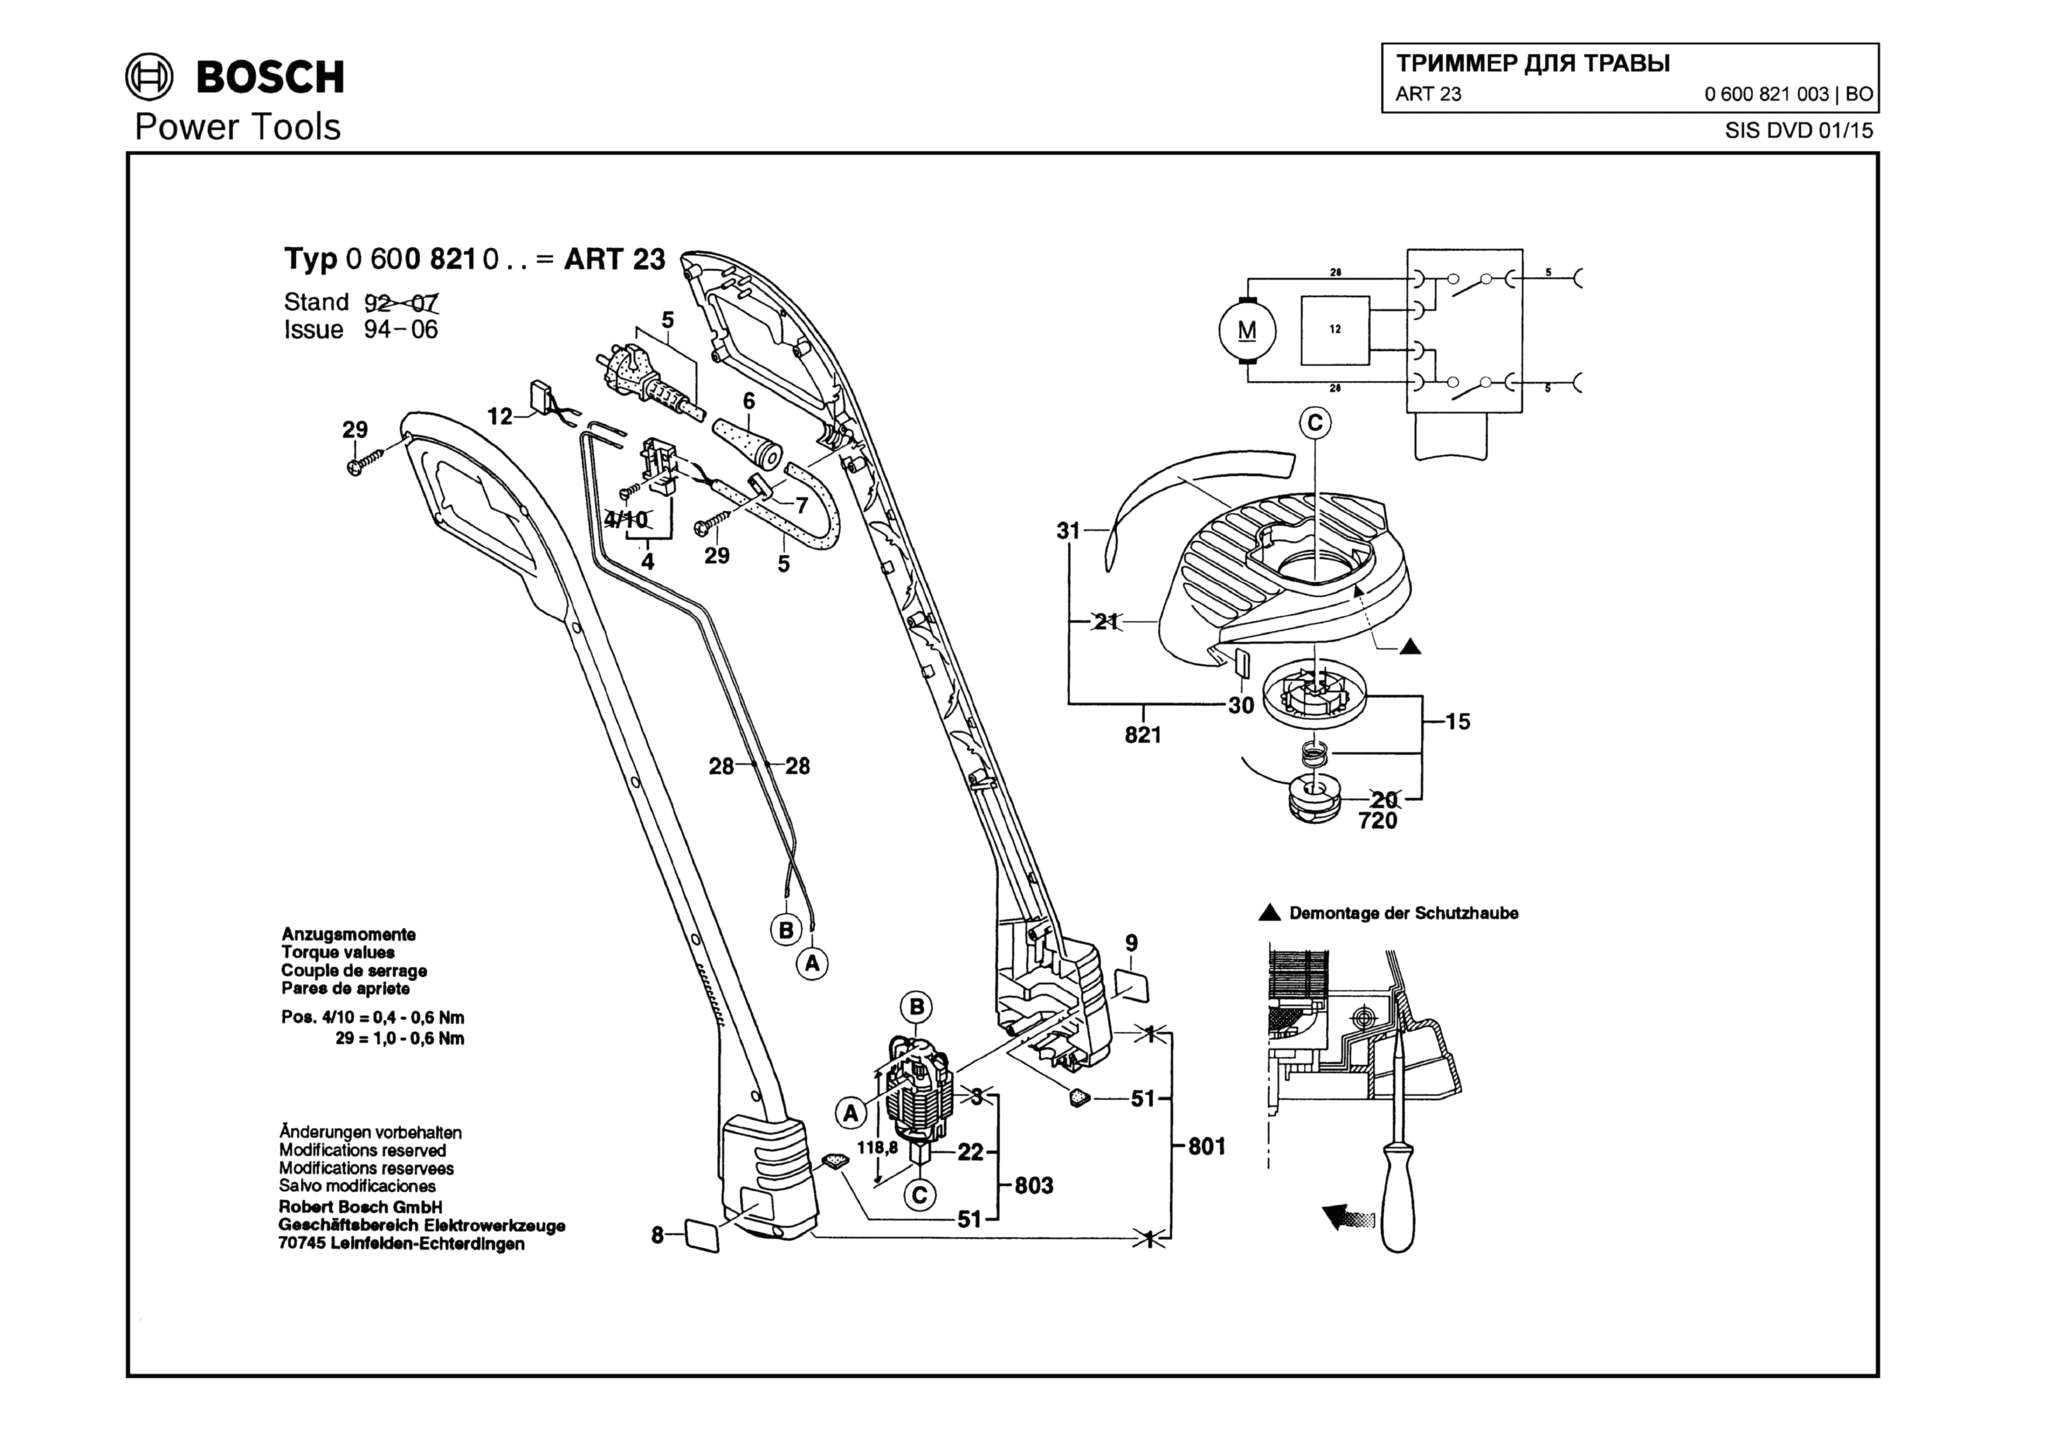 Запчасти, схема и деталировка Bosch ART 23 (ТИП 0600821003)